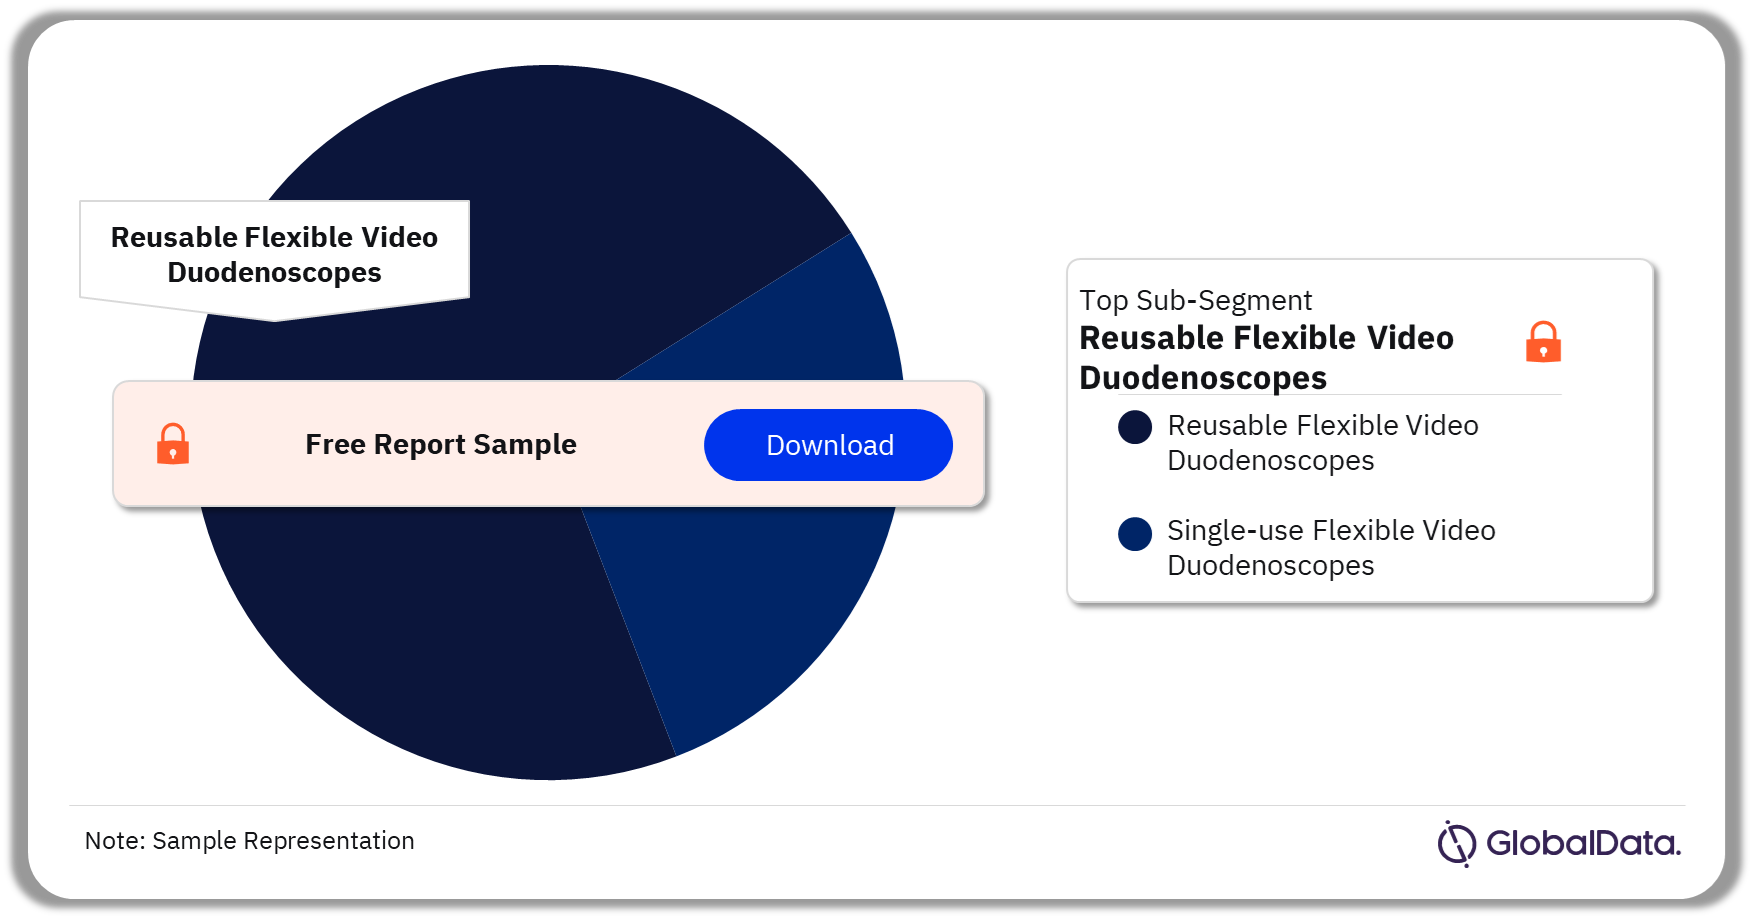 Flexible Video Duodenoscopes Market Analysis by Sub-segments, 2023 (%)